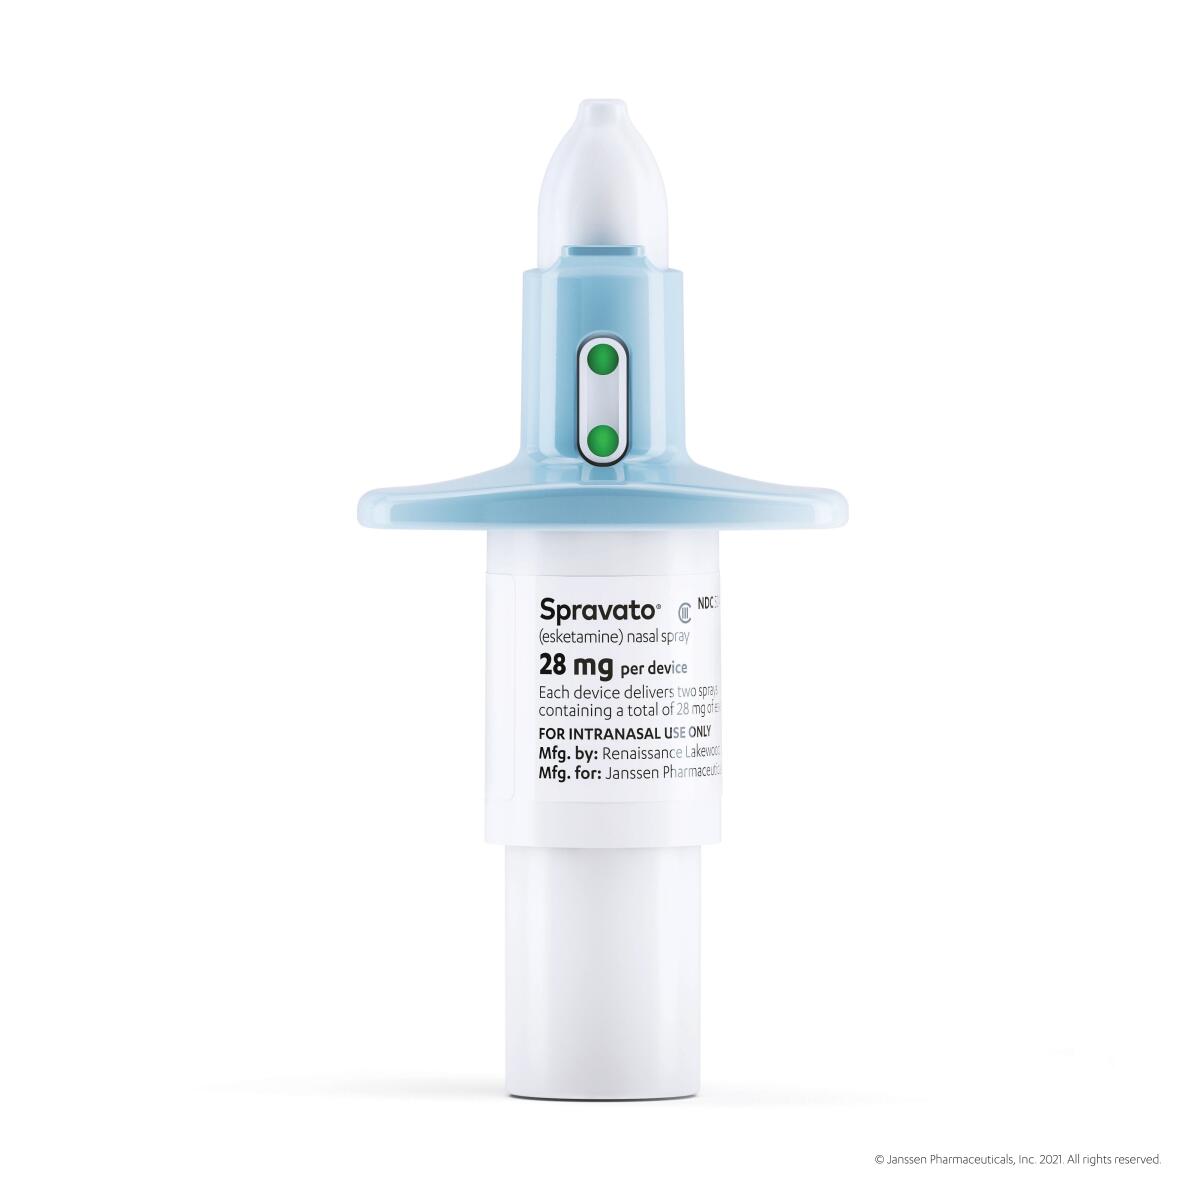 A bottle of Spravato, a prescription nasal spray containing a component of ketamine